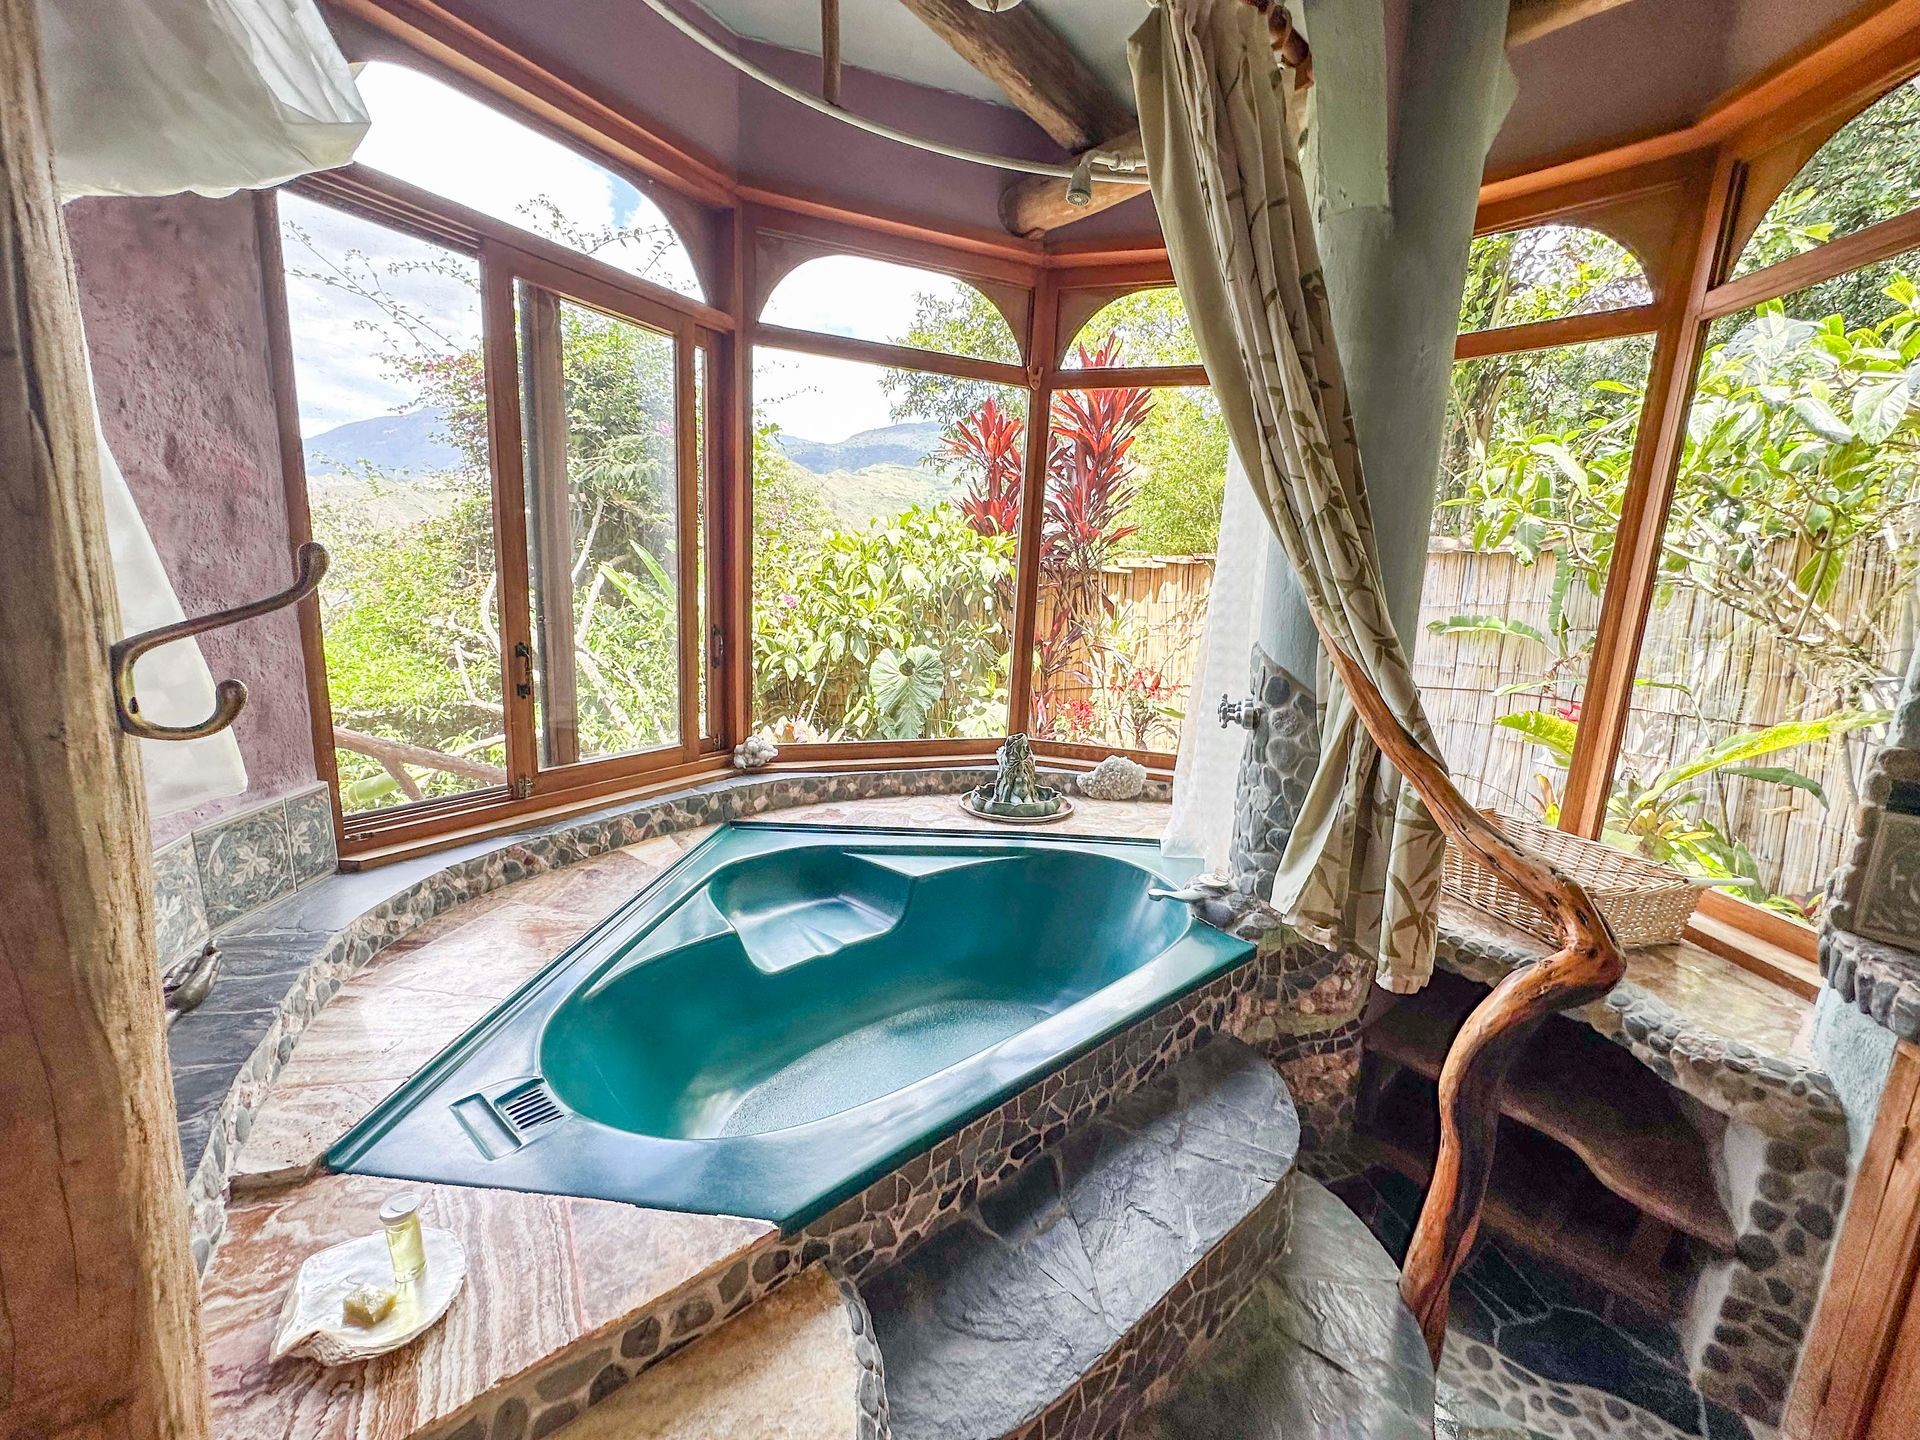 Bathtub with the mountain view